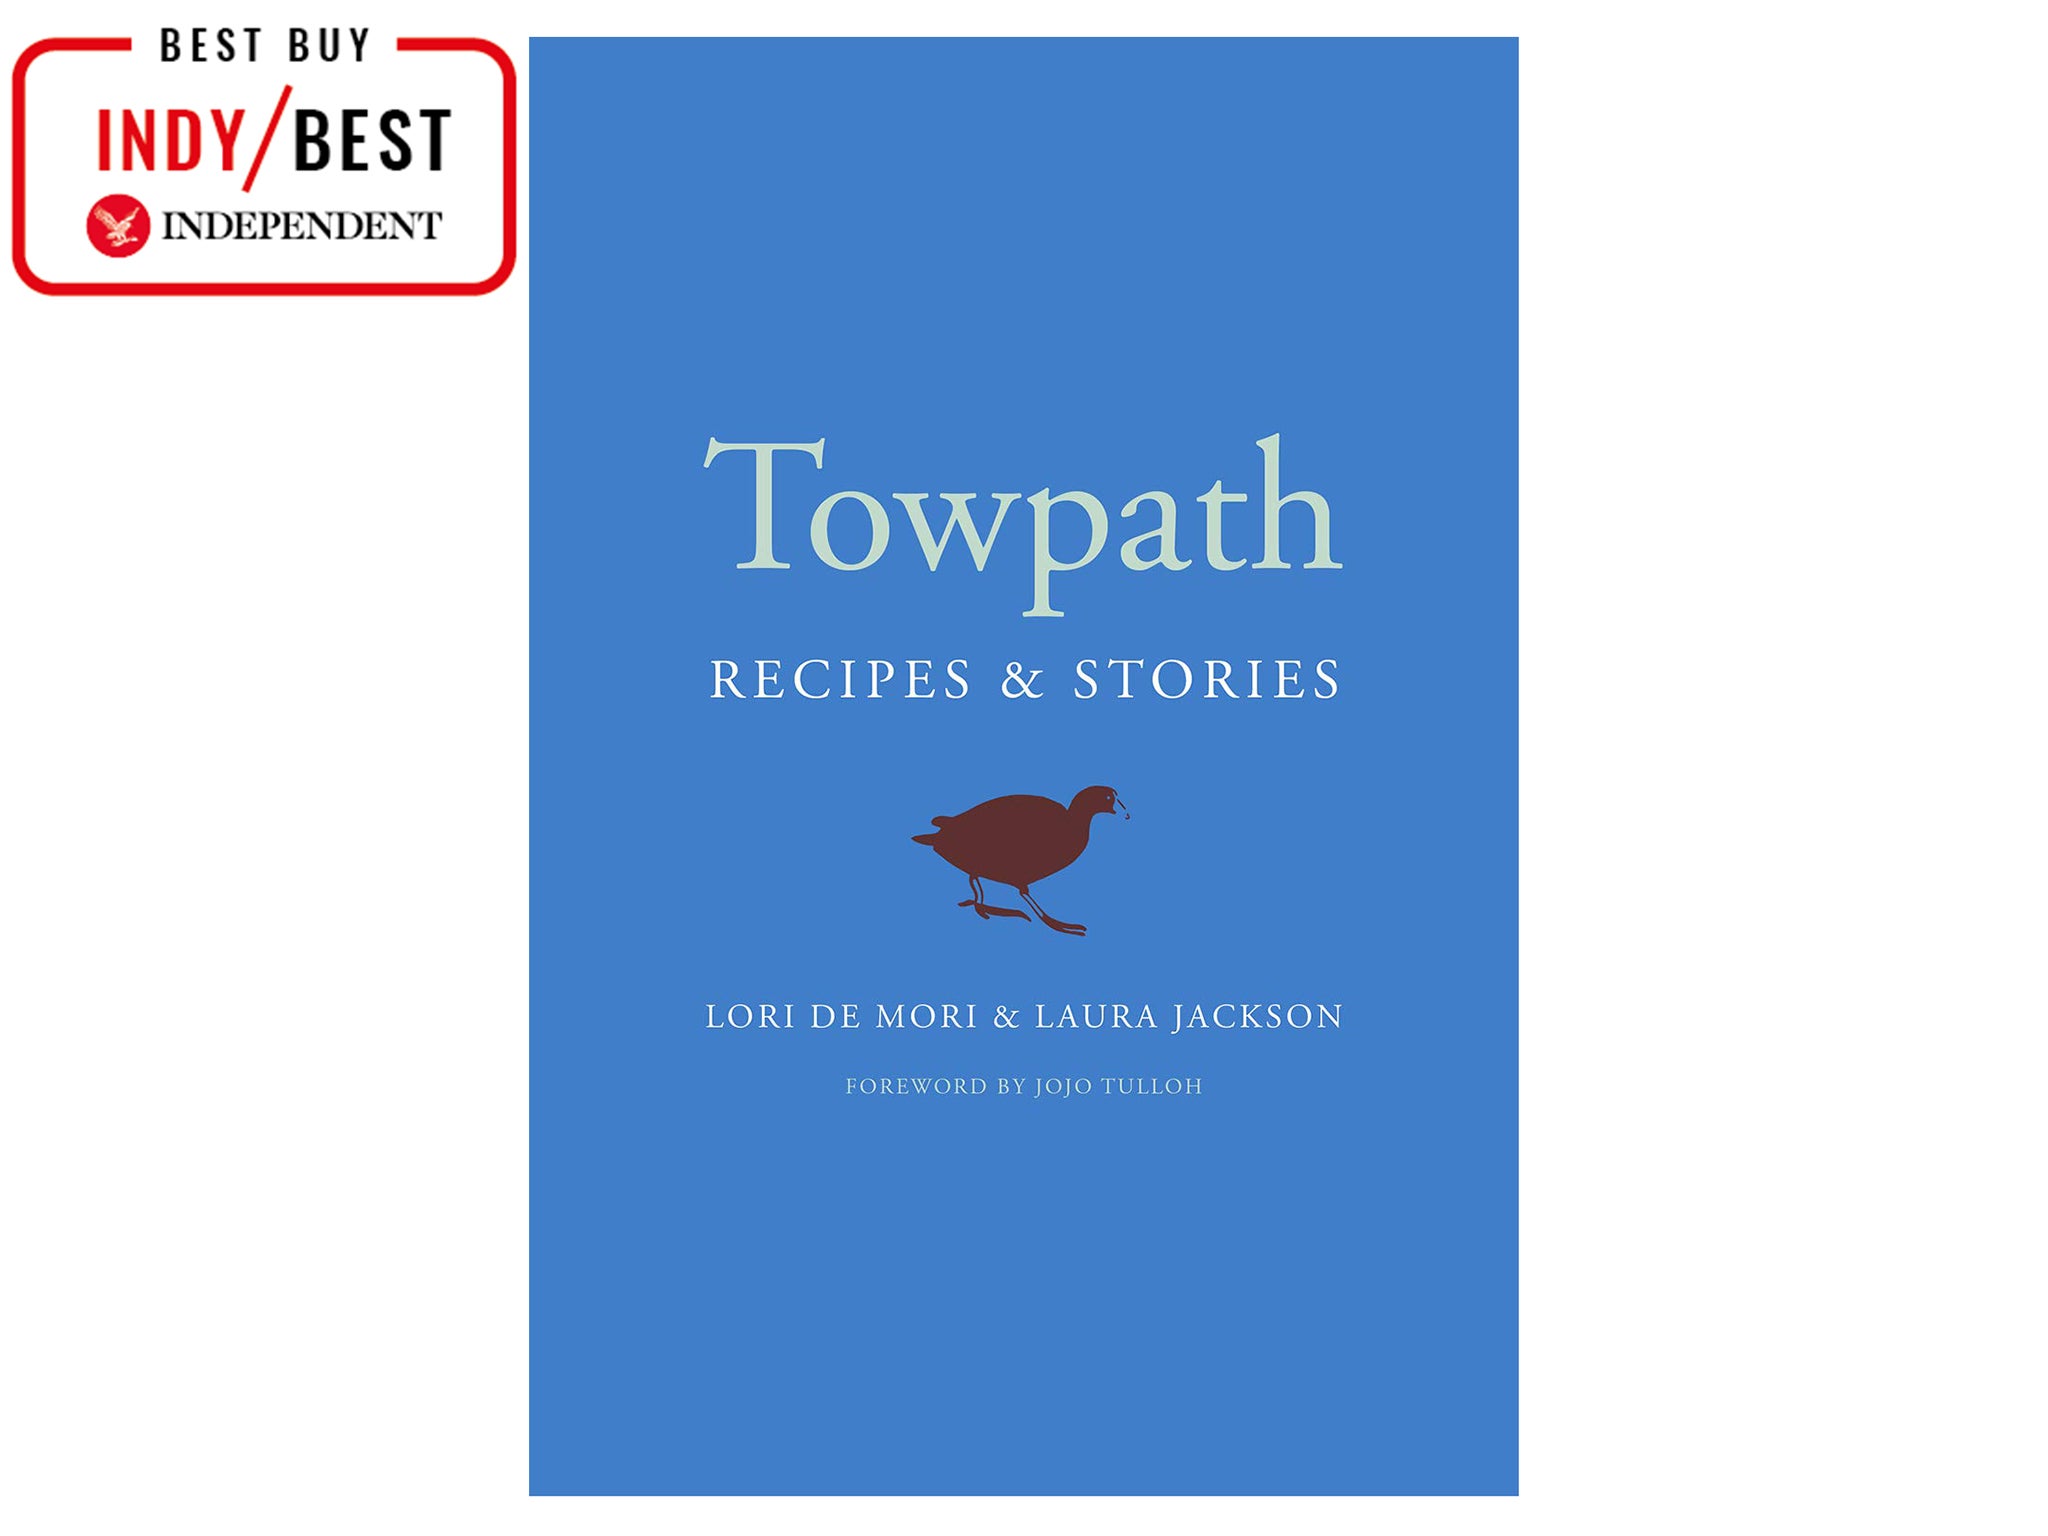 towpath-indybest-restaurant-cookbook copy.jpg